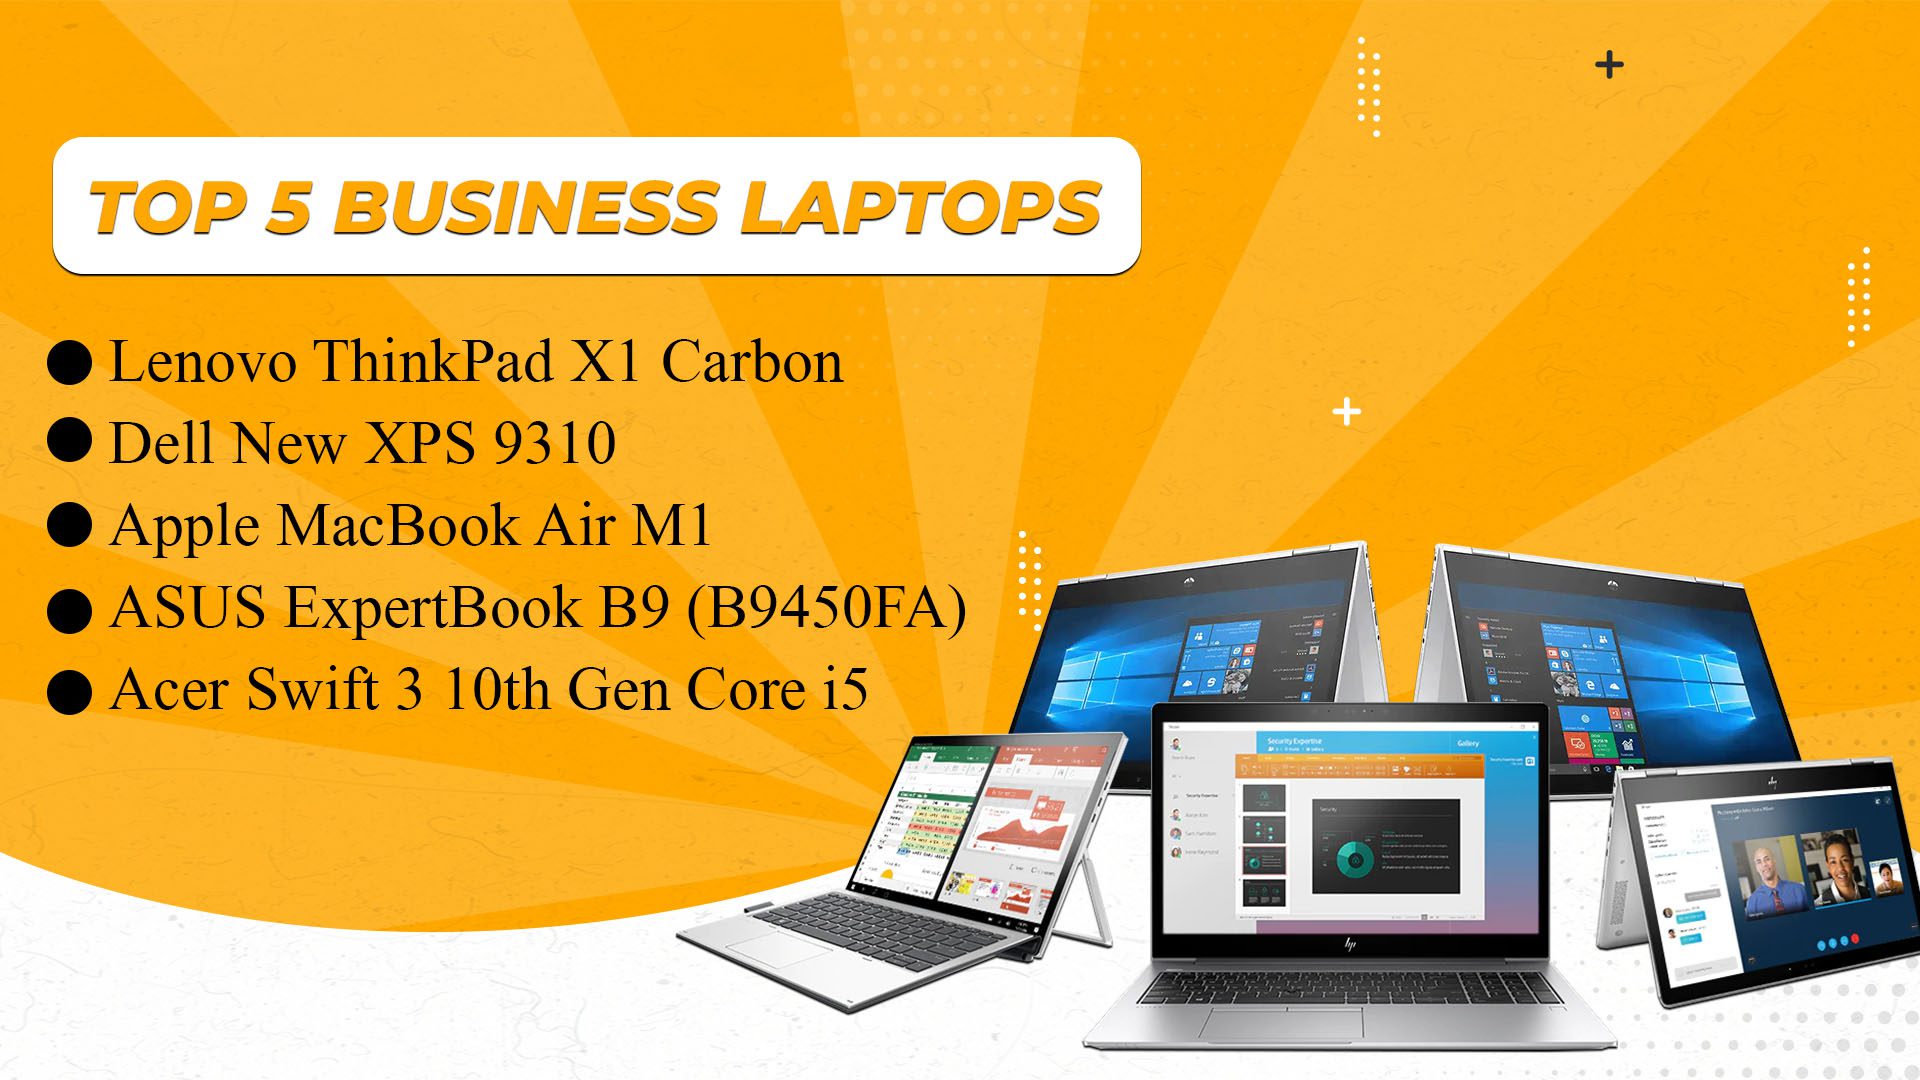 Top 5 Business Laptops